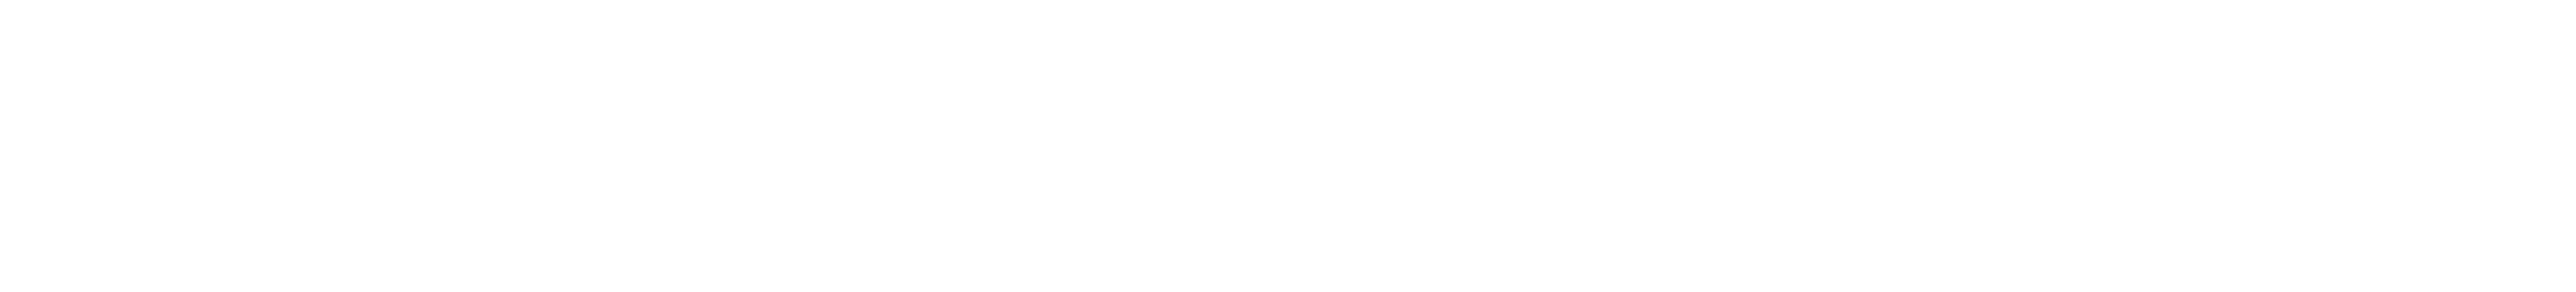 Cat Club logo
